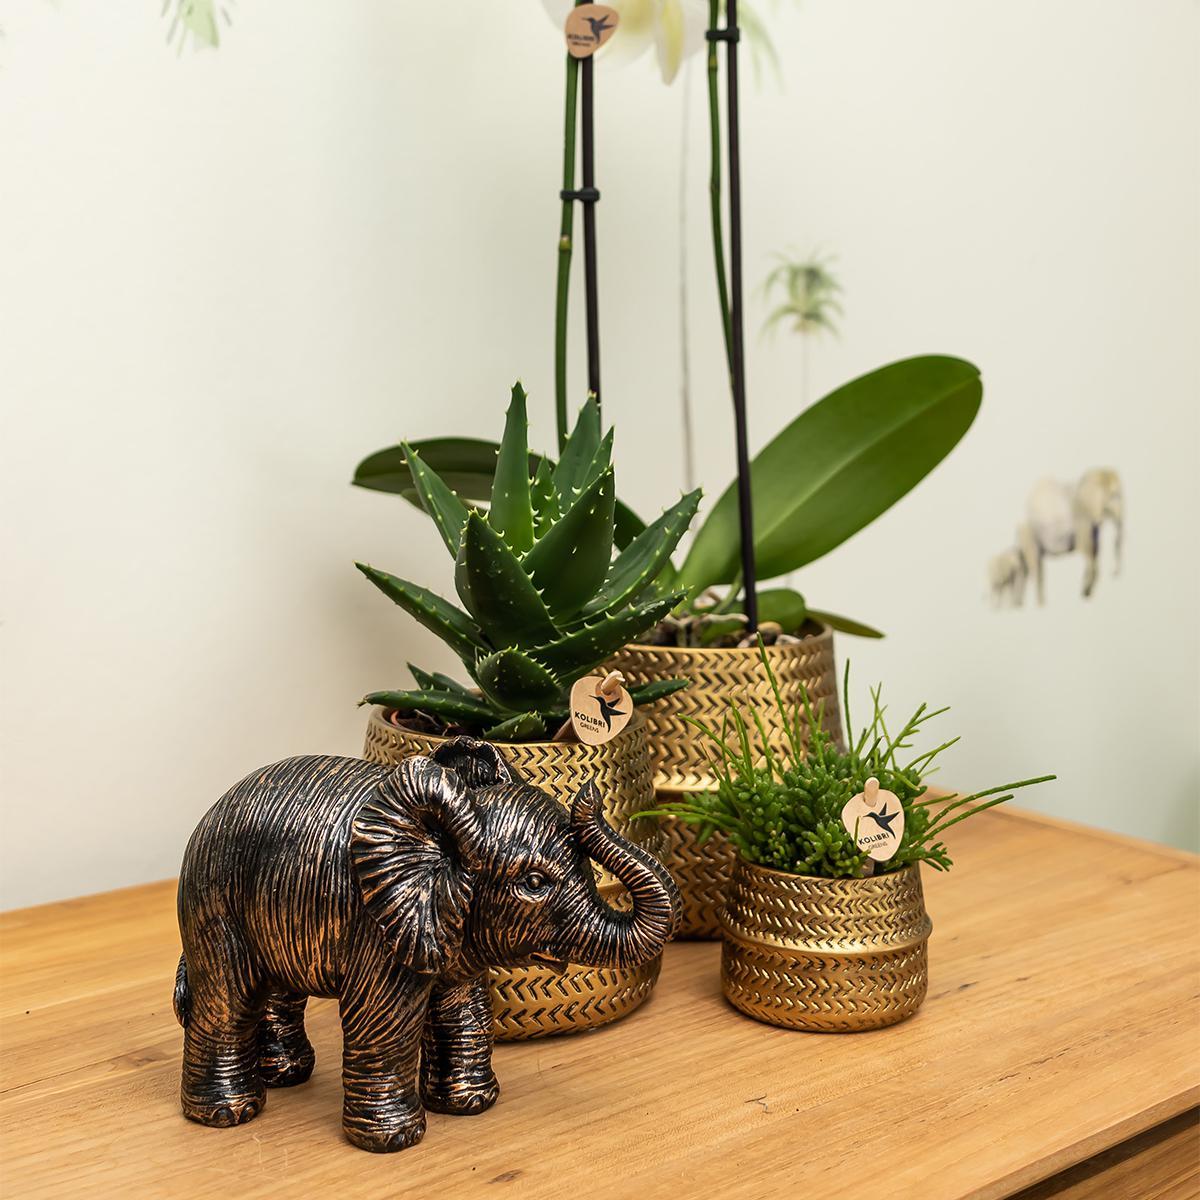 Kolibri Home | Ornament - Decoratie beeld Elephant zwart